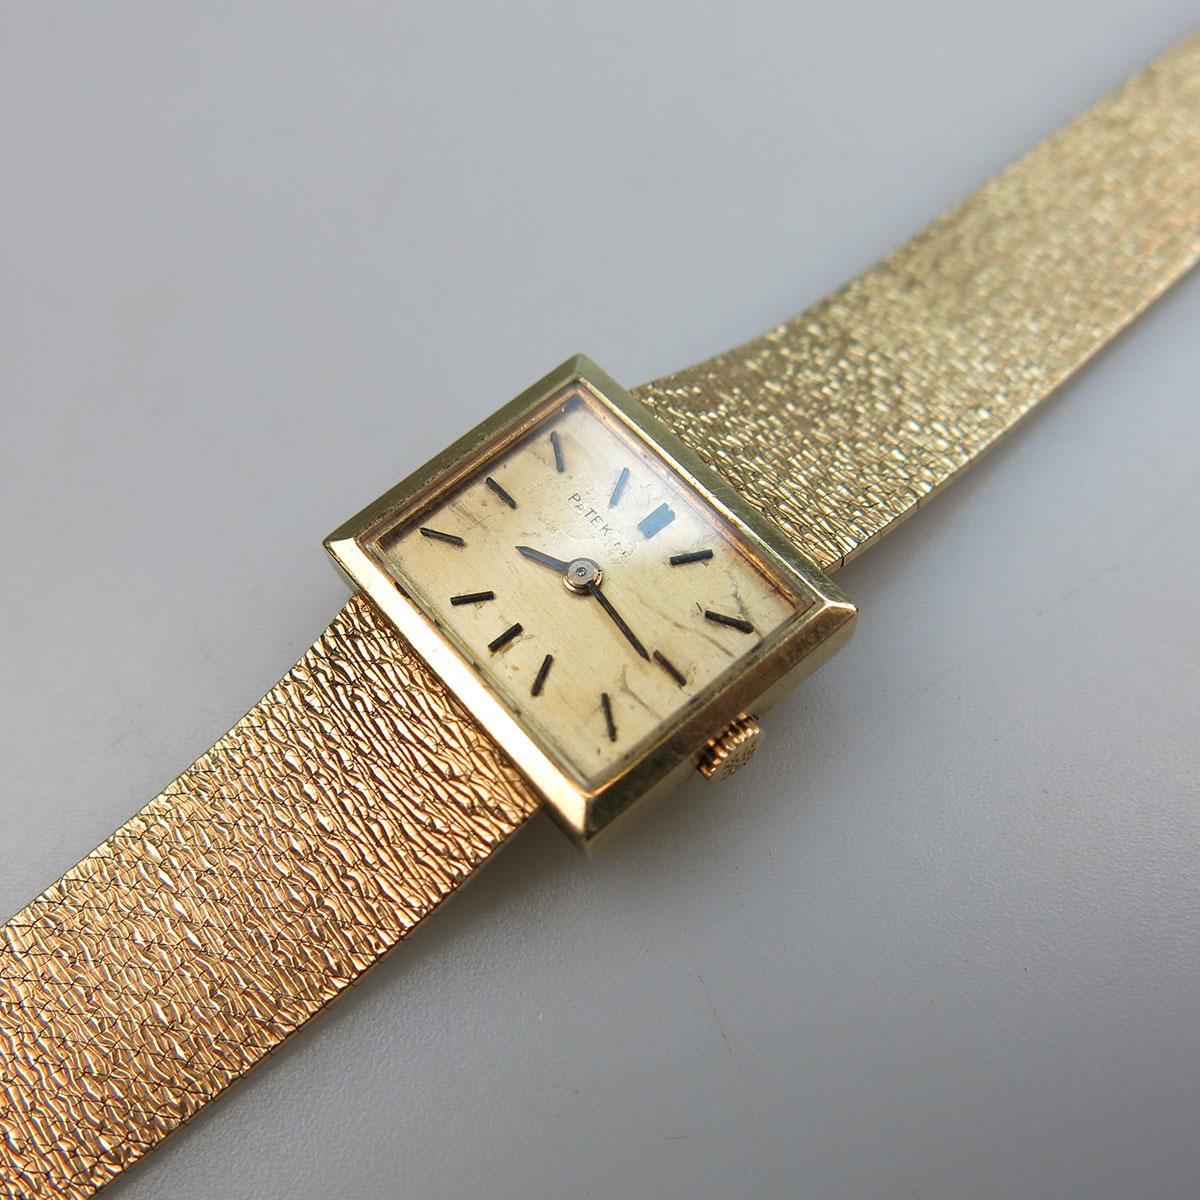 Lady’s Patek Philippe Wristwatch